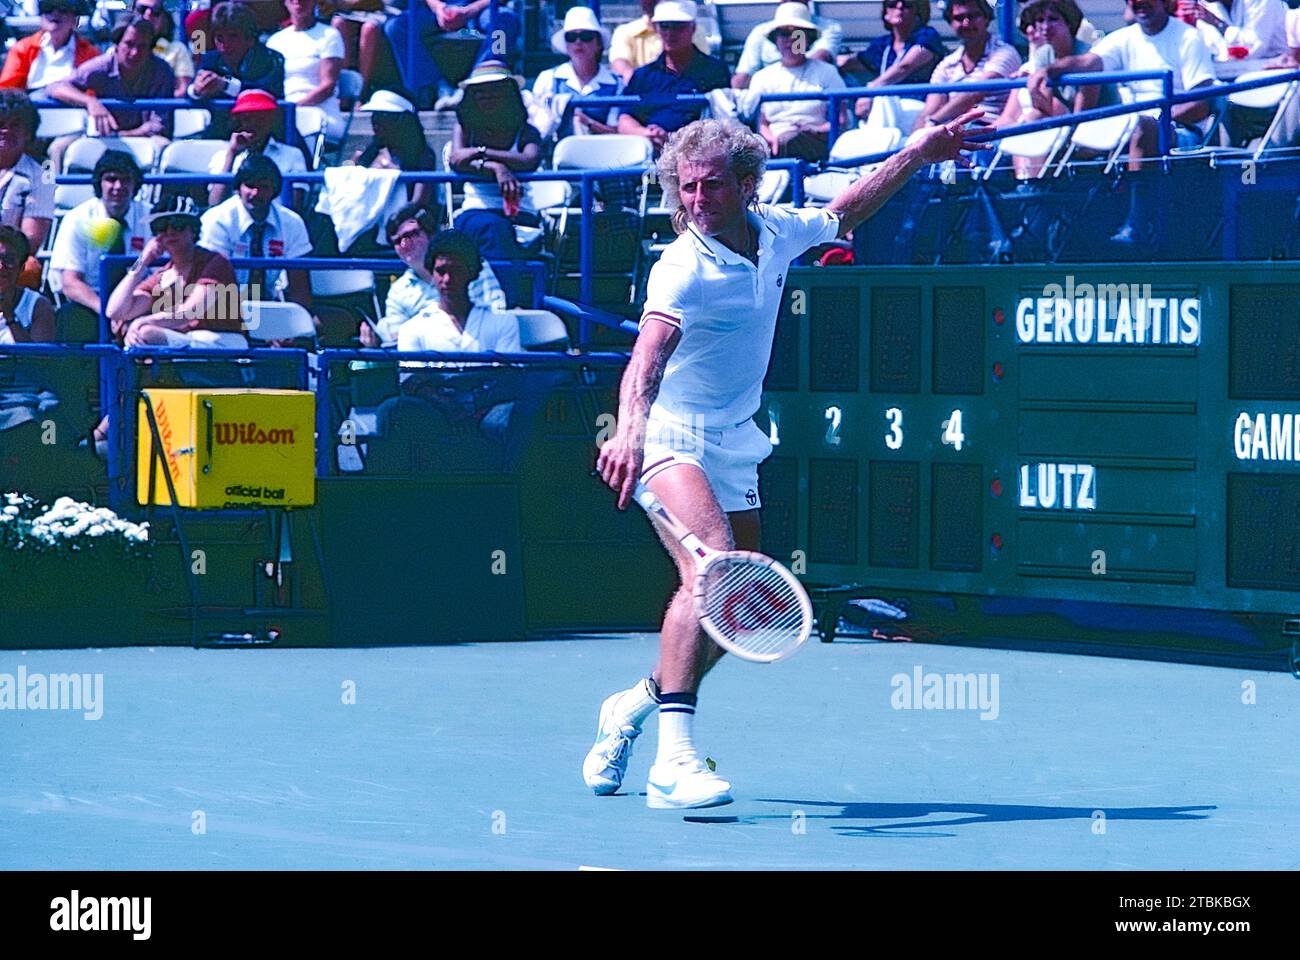 Vitas Gerulaitis (USA) competing at the 1978 US Open Tennis. Stock Photo